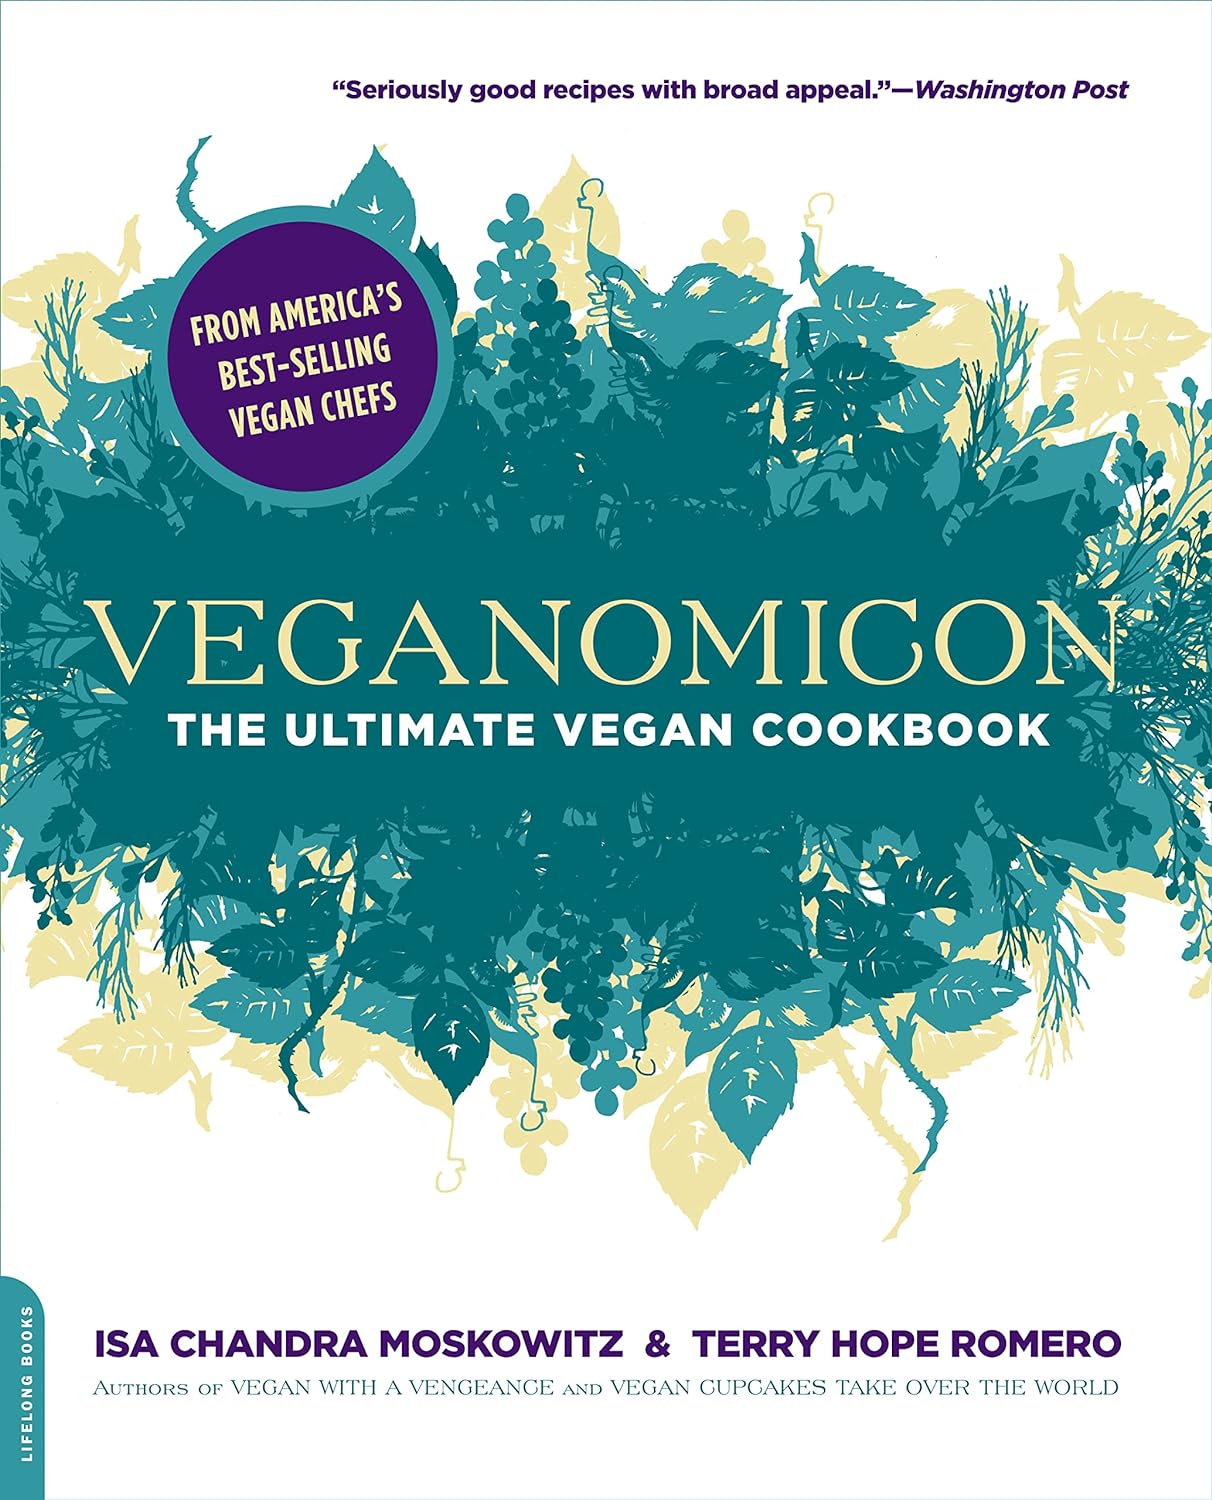 VegNews.veganomicon